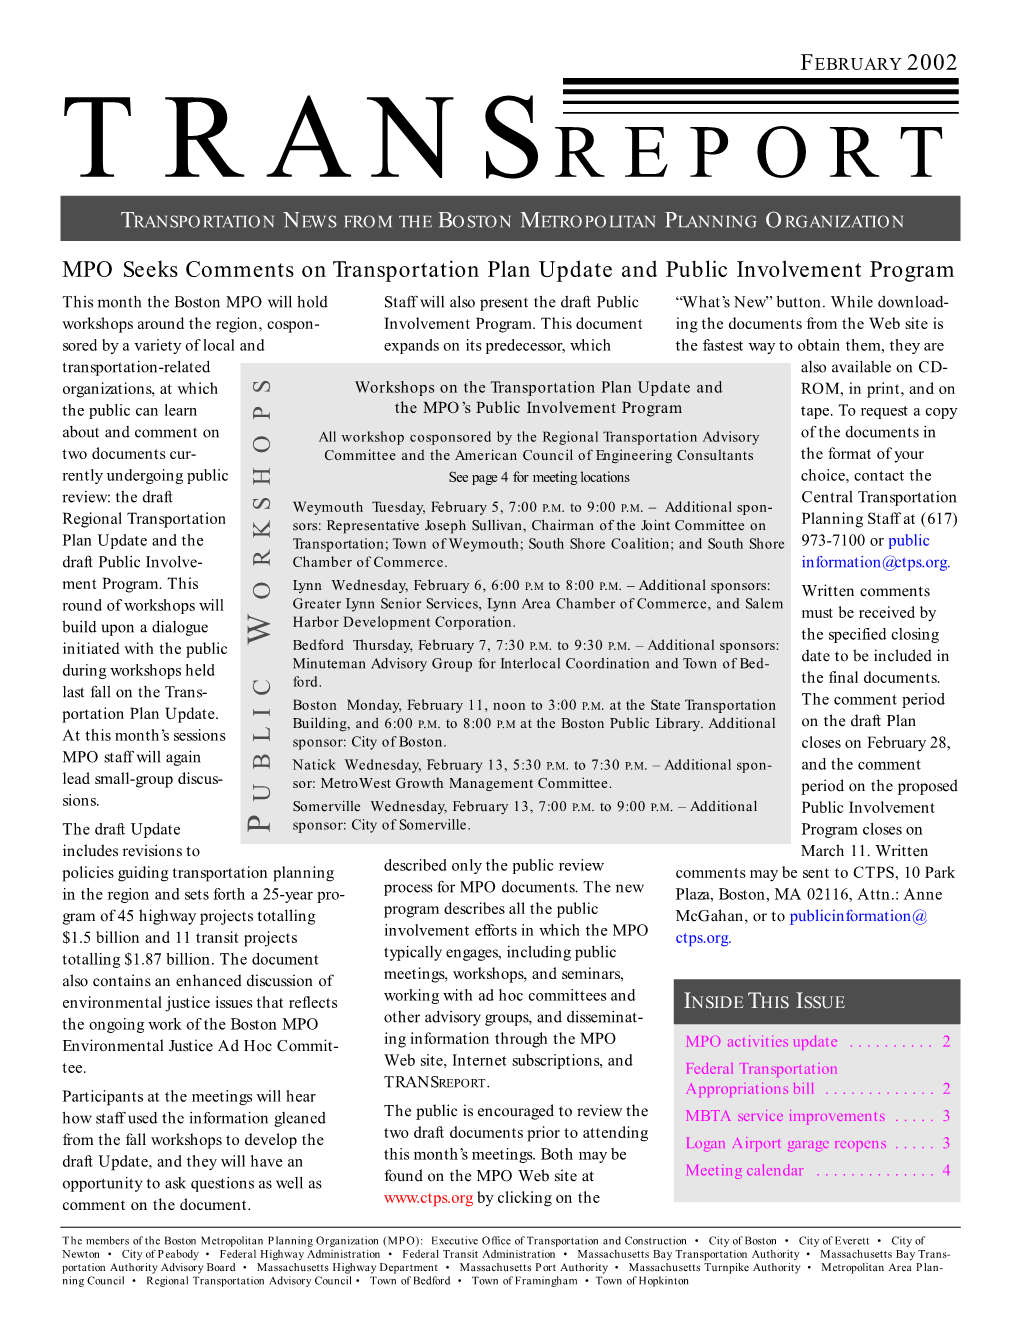 Transreport Transportation News from the Boston Metropolitan Planning Organization